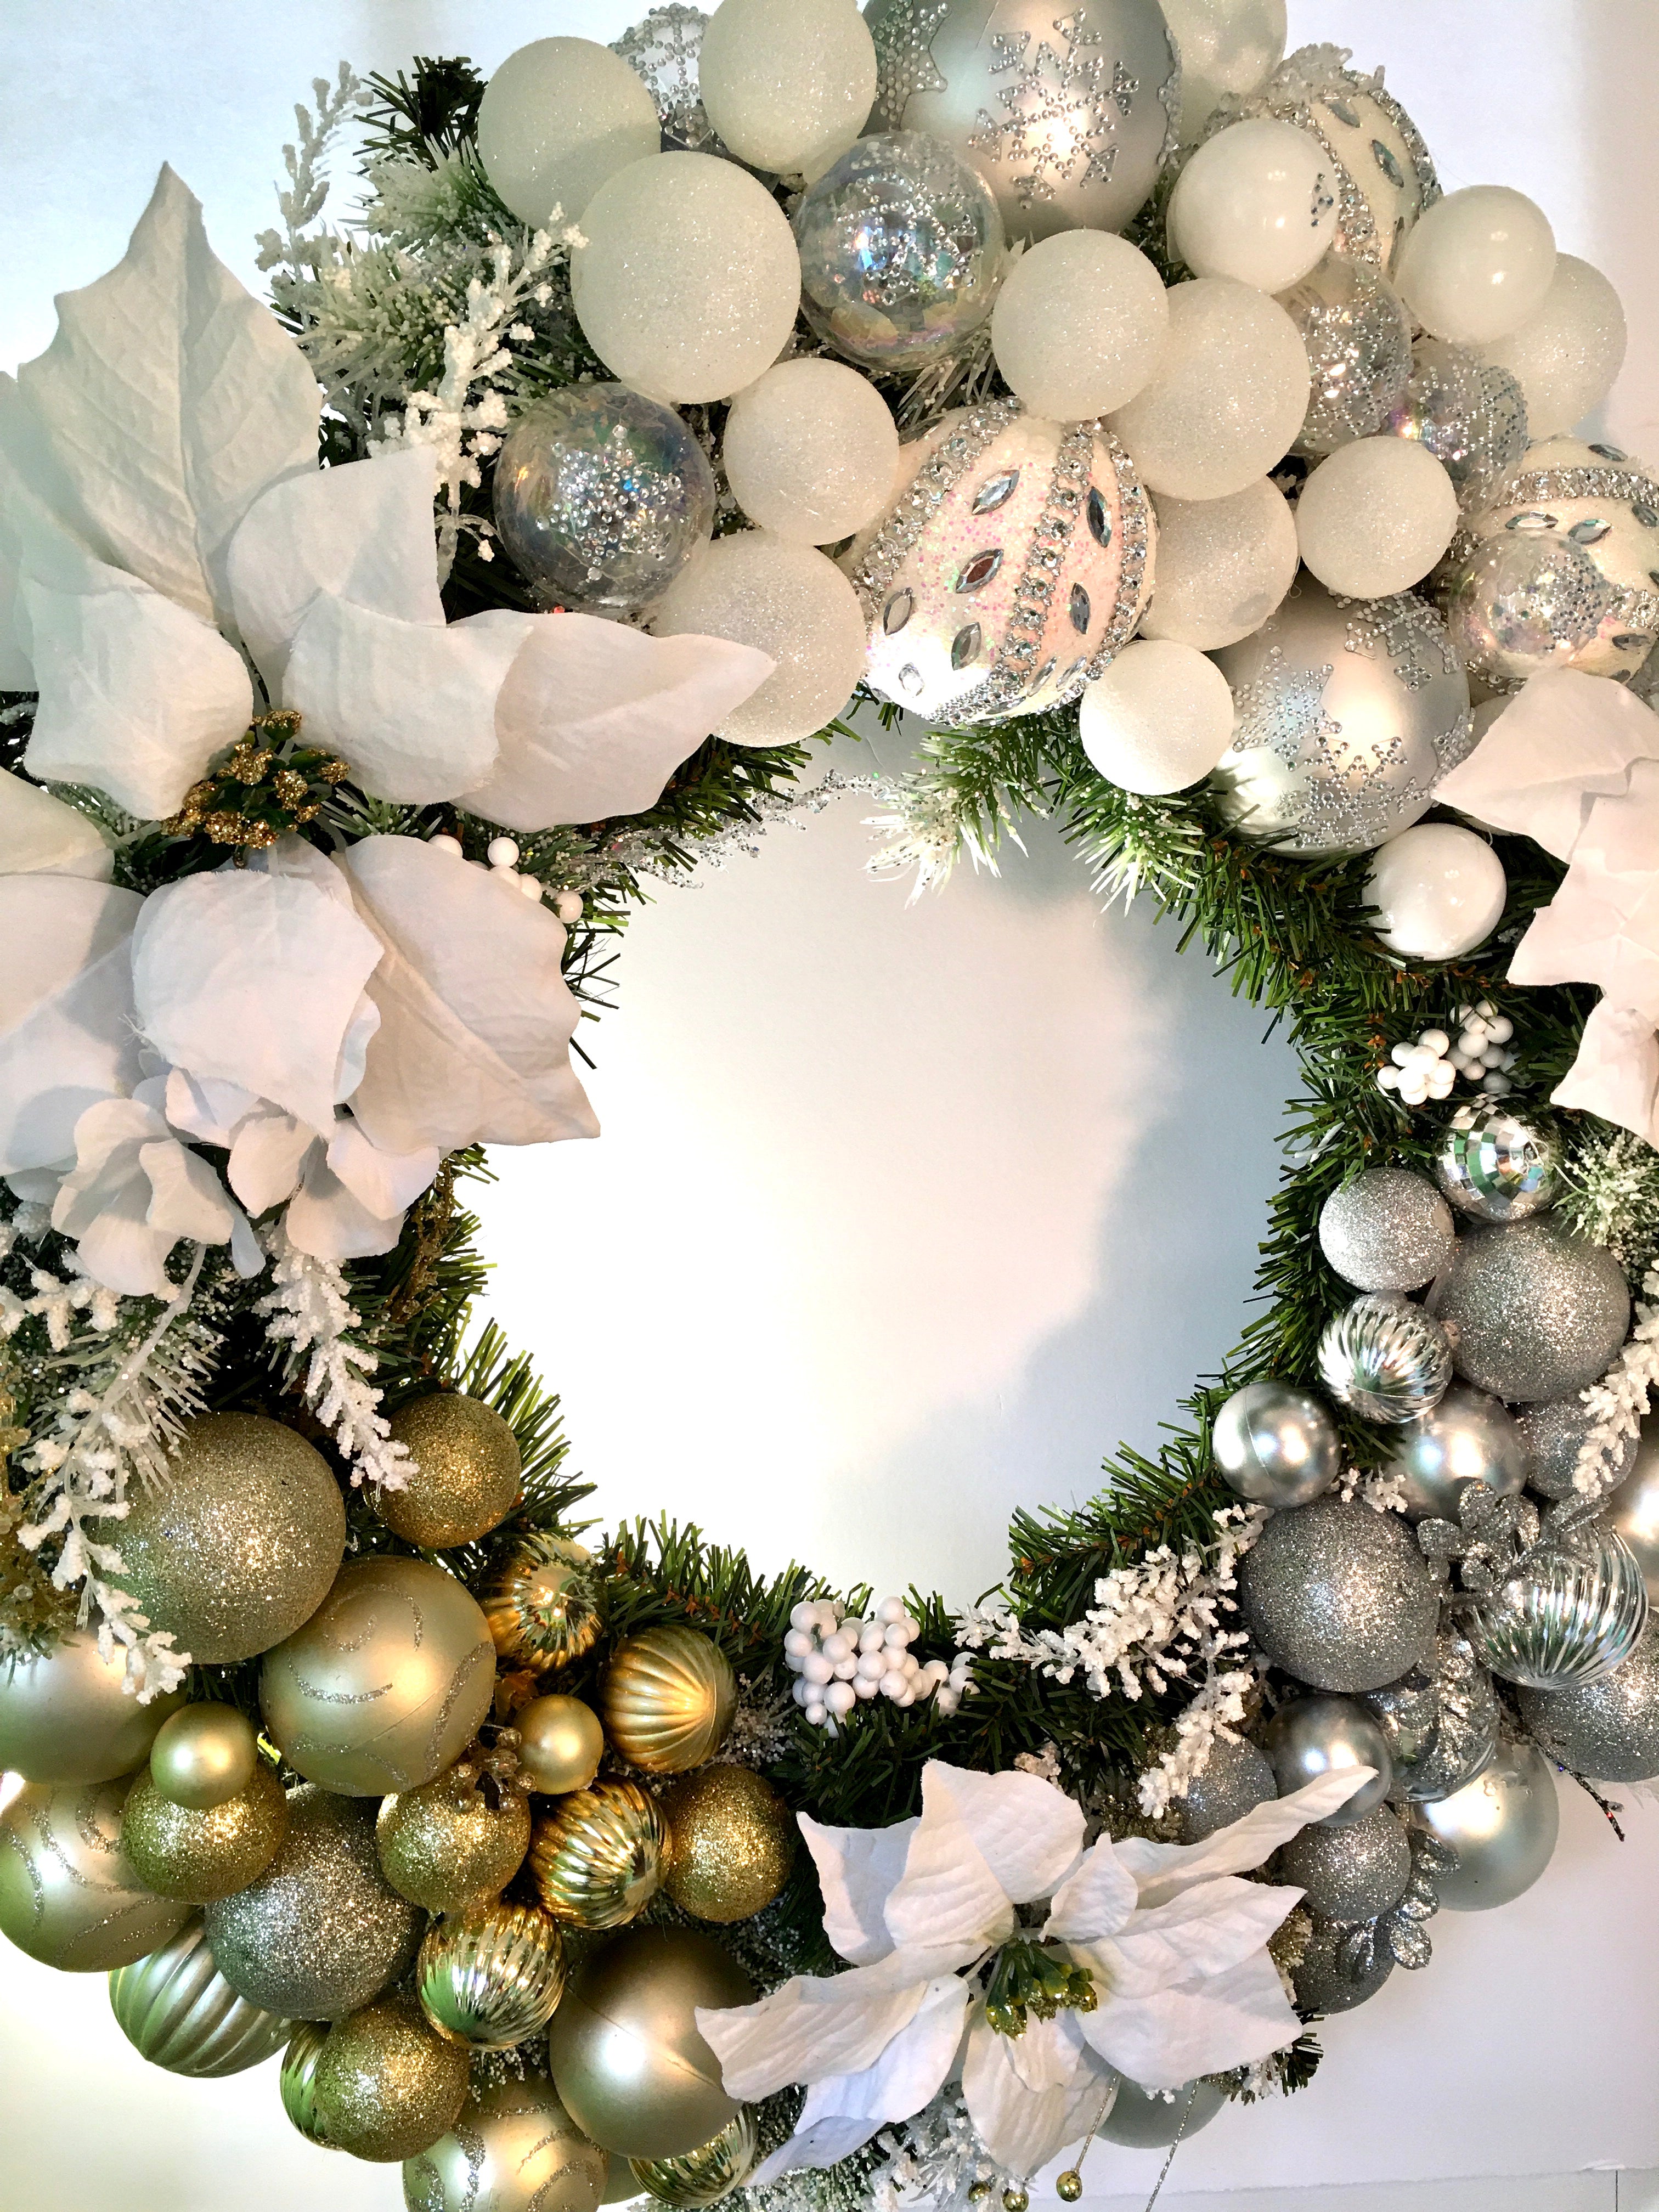 Jingle Bells Wreath 26 X 26 x 10